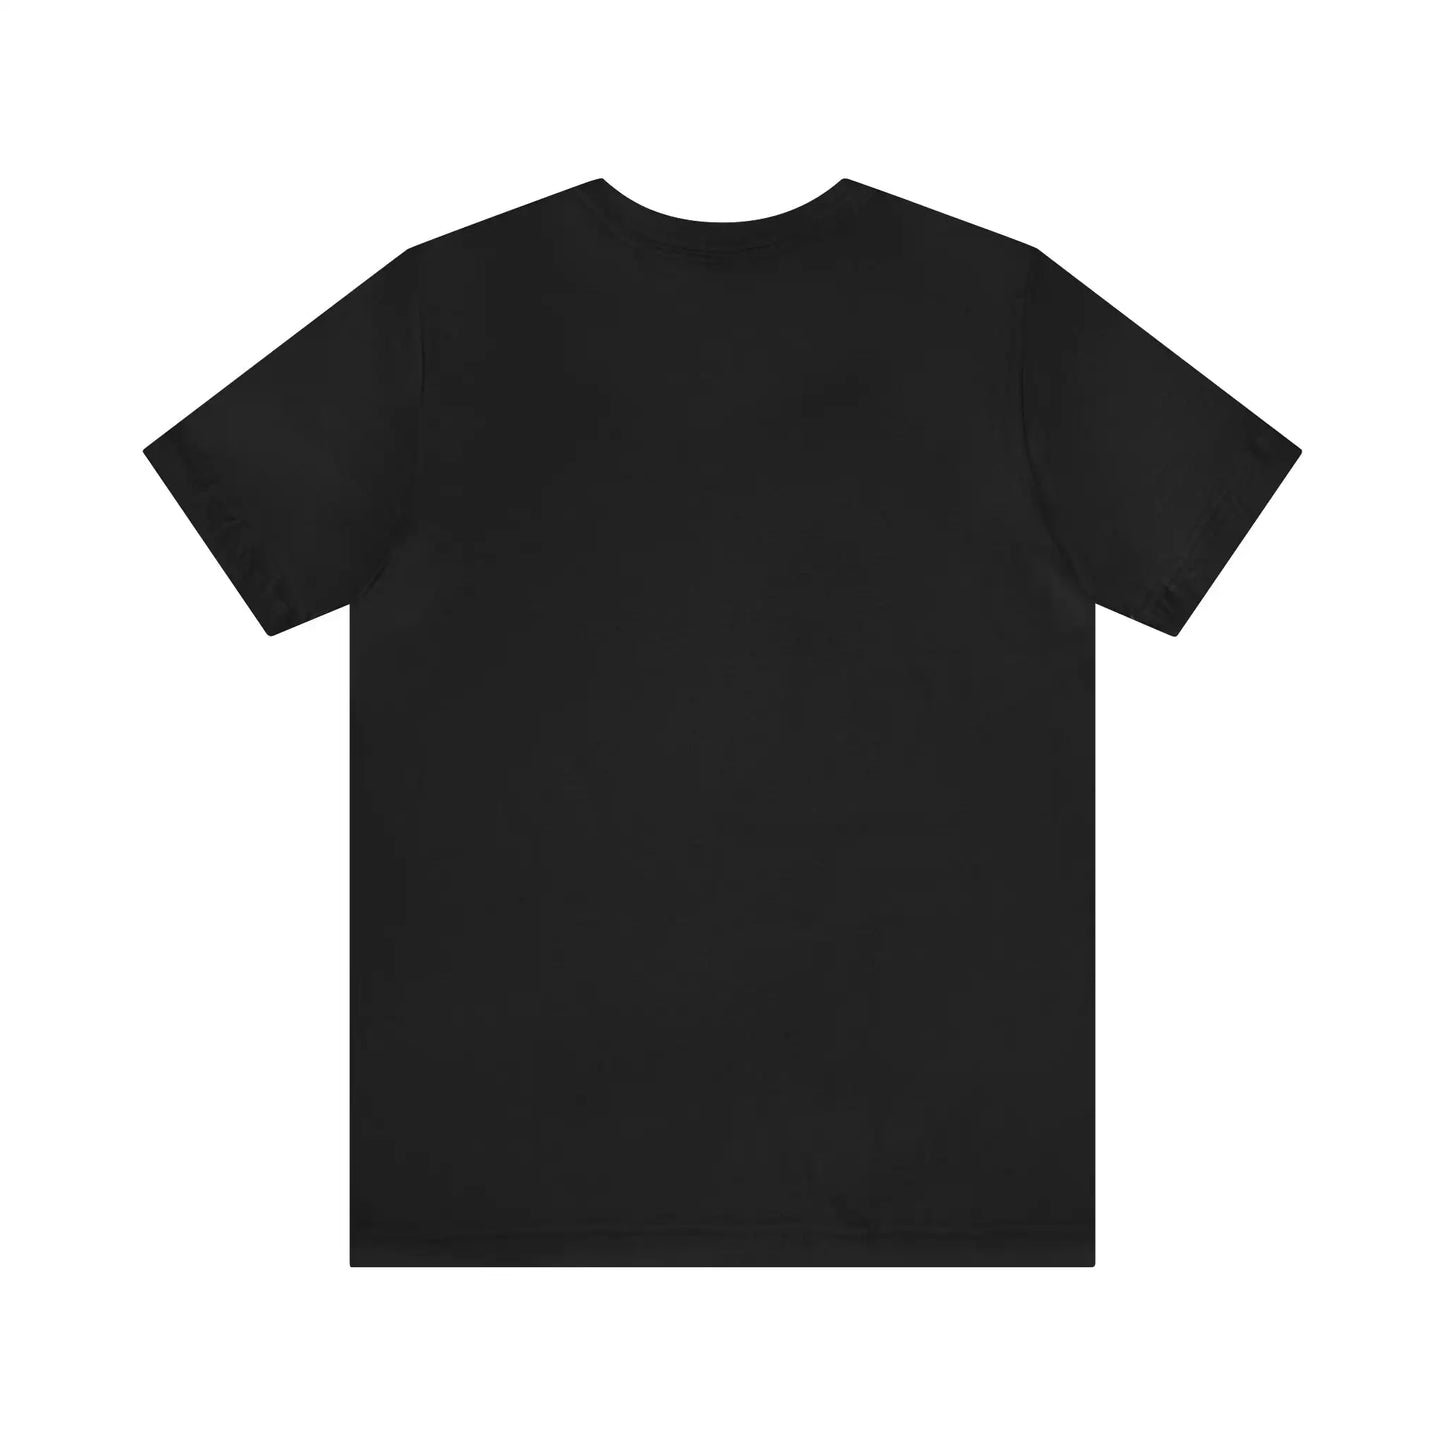 Voltron T-Shirt Cartoon Gift Tee Unisex For Men and Women